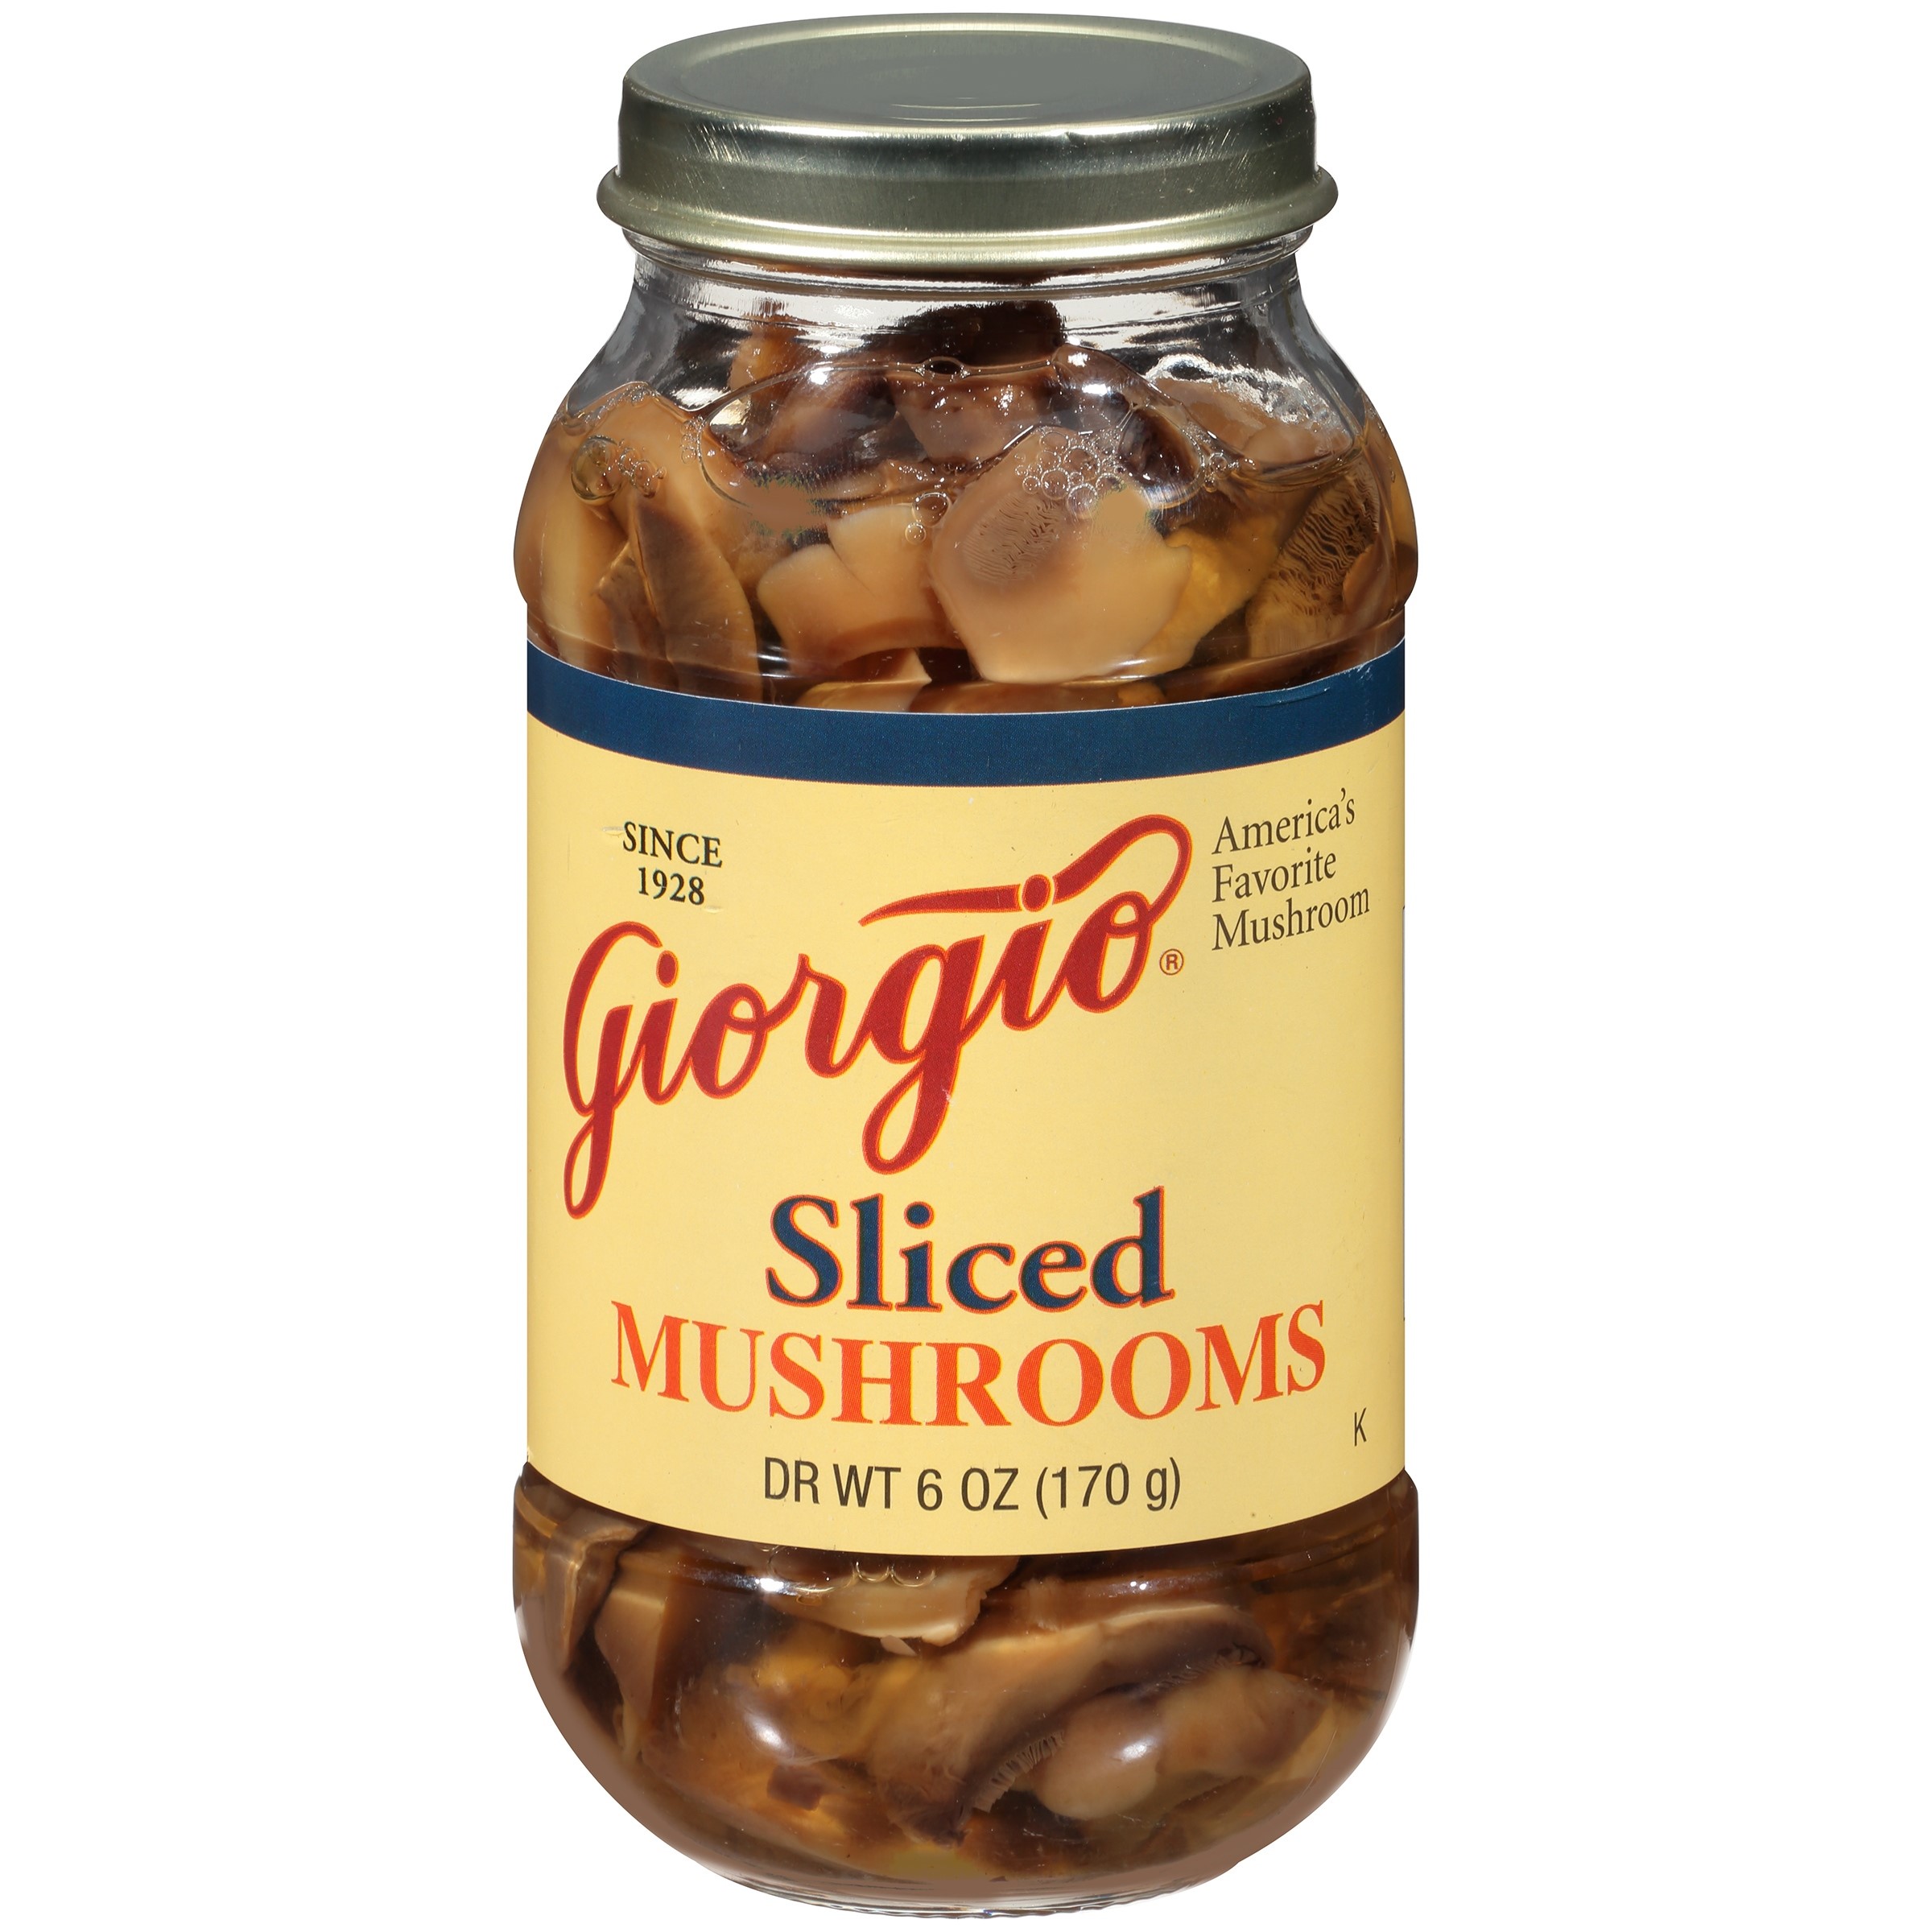 Giorgio Fat-Free Sliced Mushrooms, 6 oz, Jar - image 1 of 6